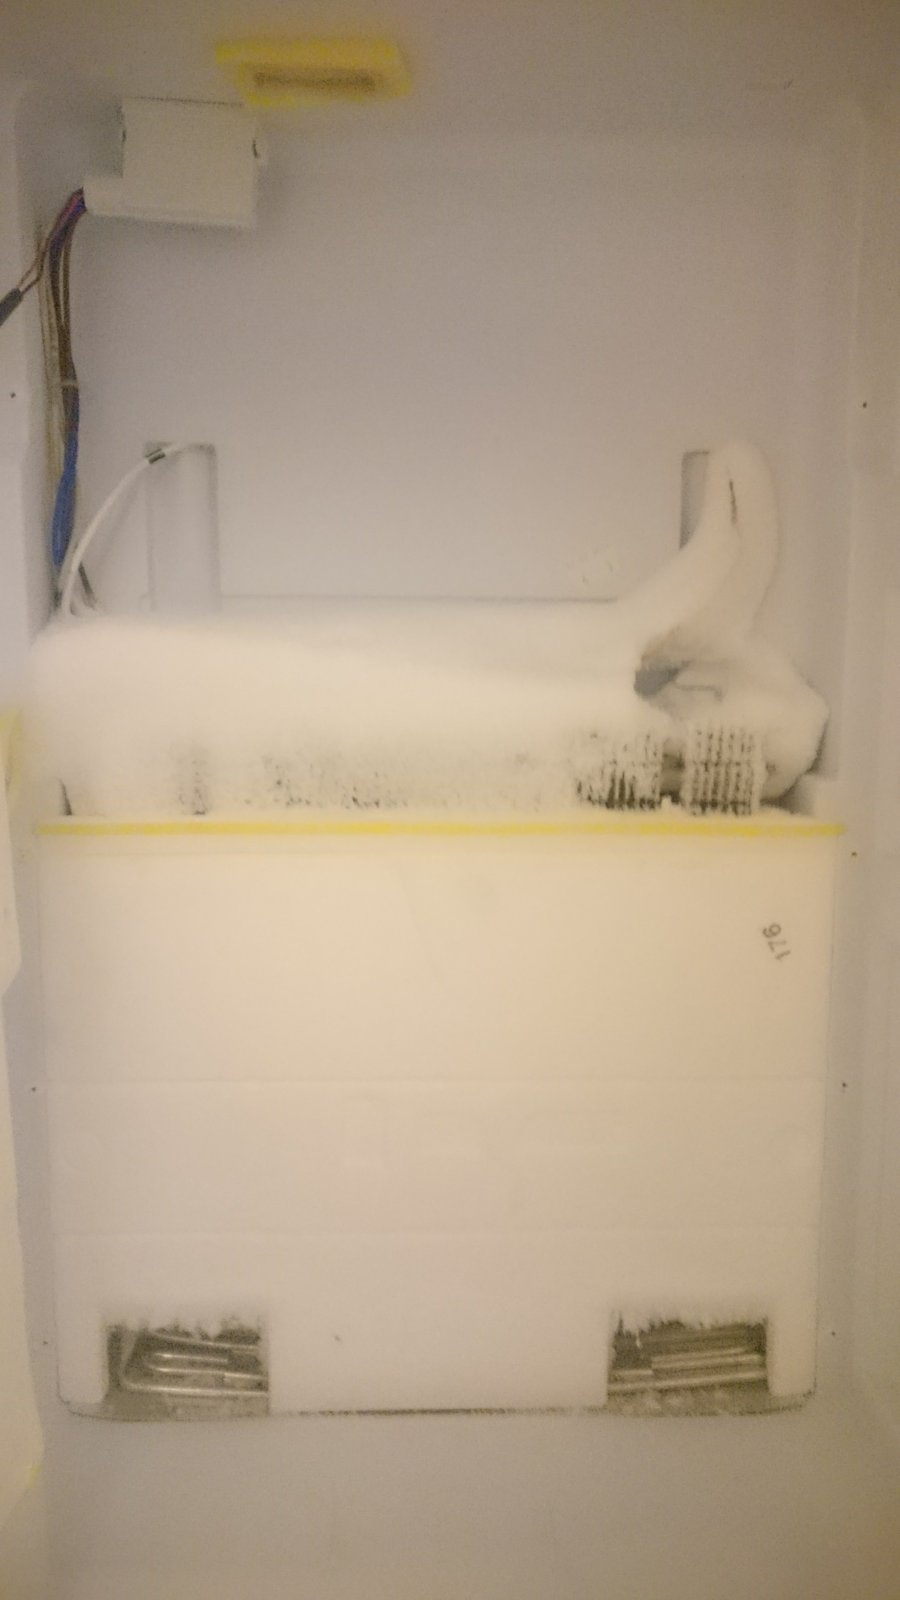 33++ Hotpoint fridge freezer not cooling properly information